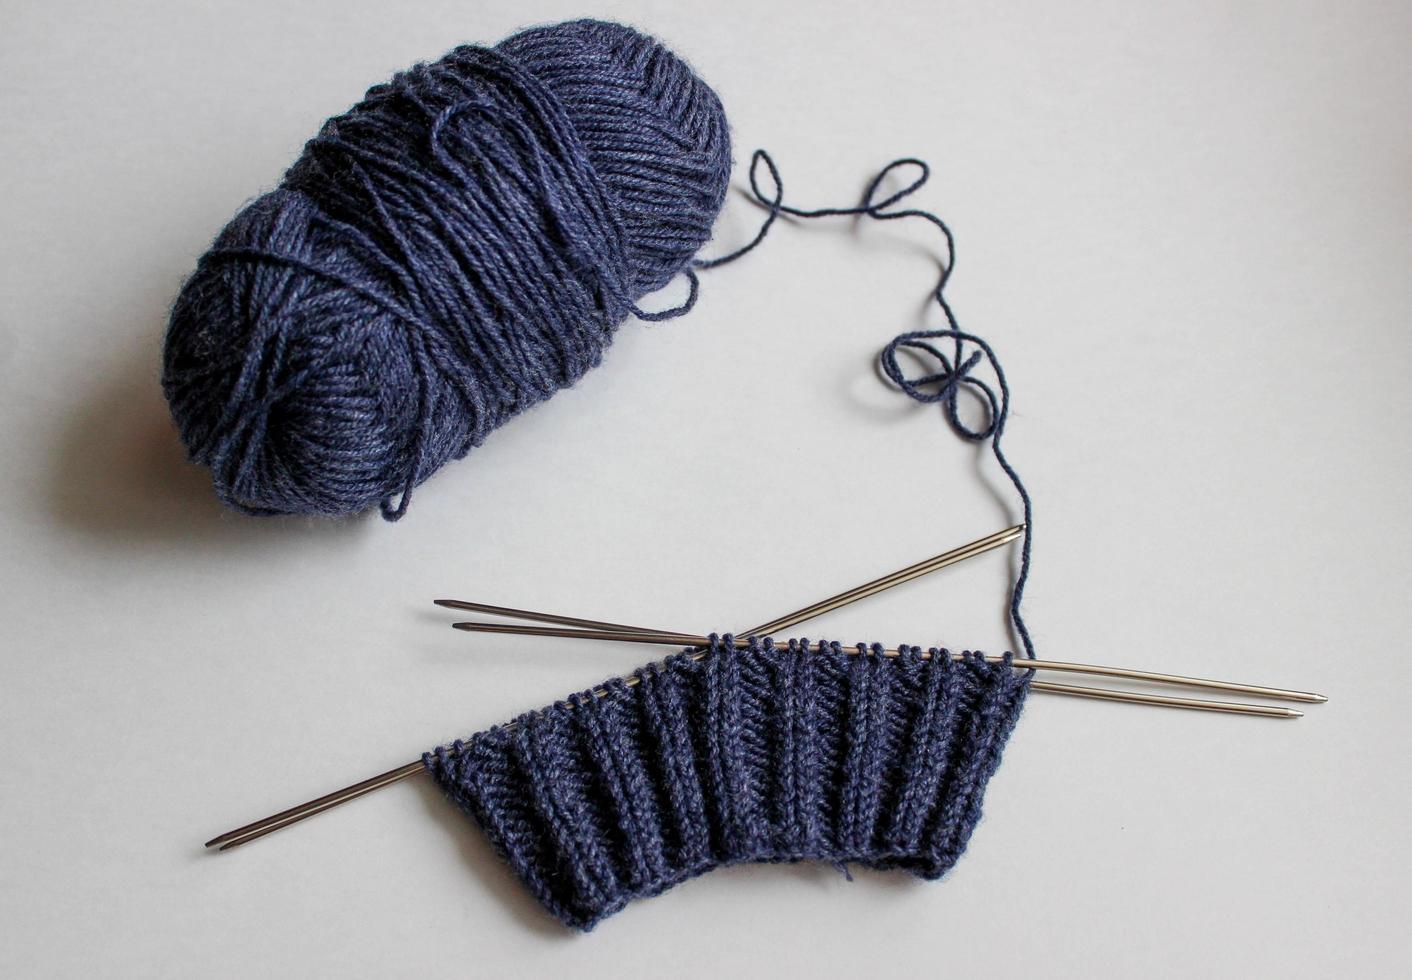 Ball of yarn and knitting needles on white background. Handmade process photo